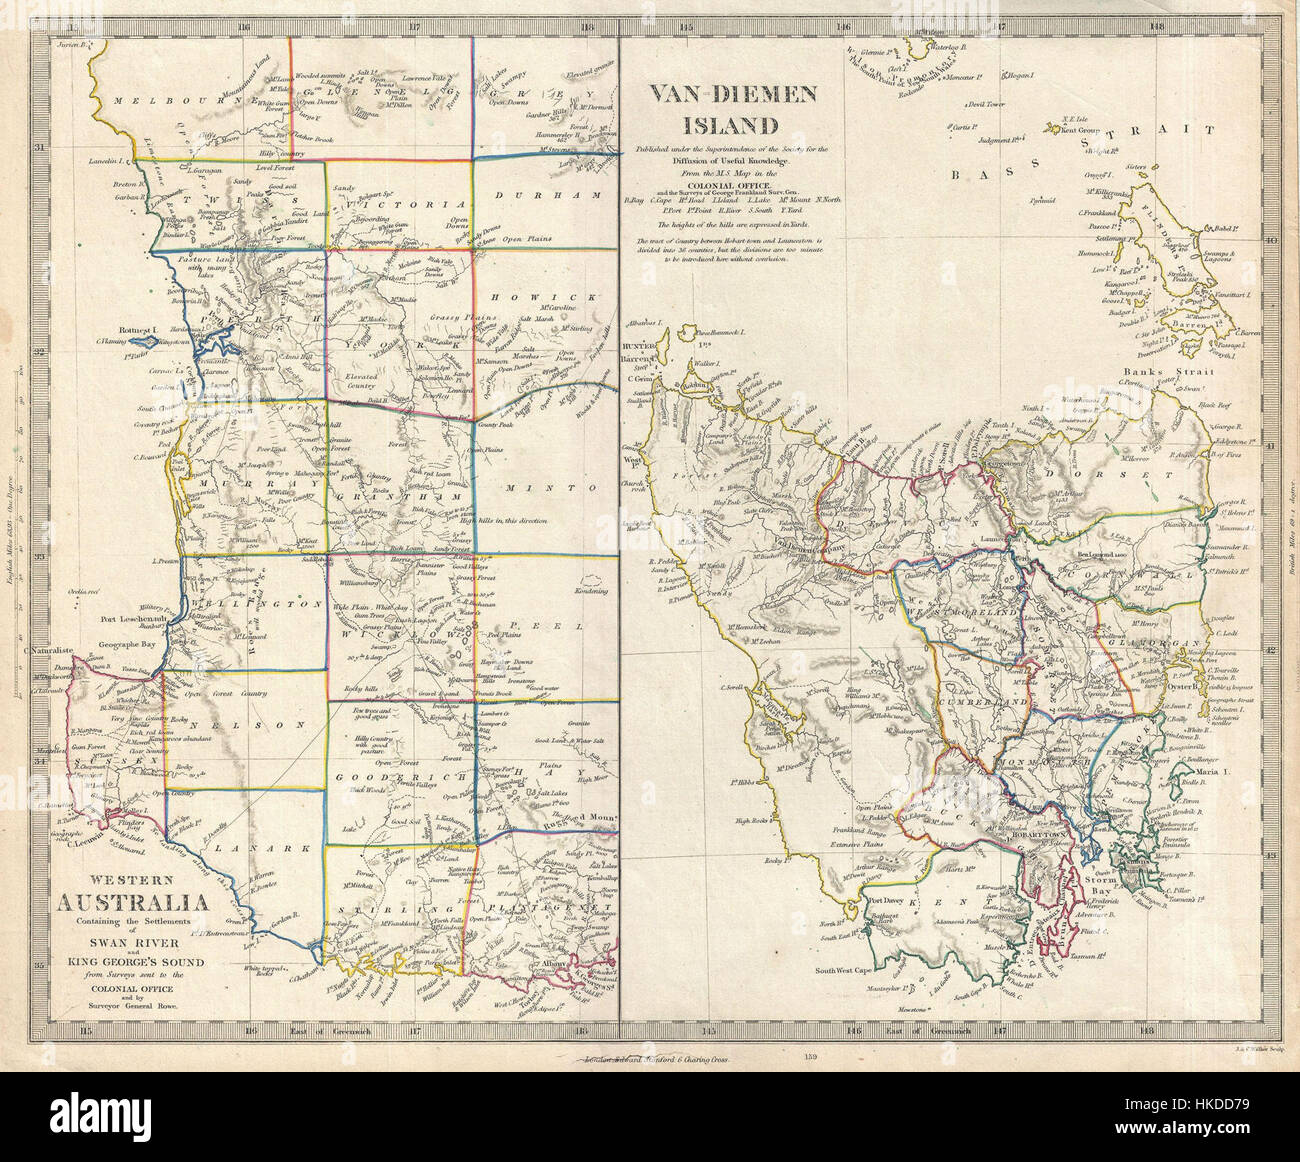 1849 S.D.U.K. Map of Tasmania or Van Diemen's Land and Western Australia   Geographicus   VanDiemen sduk 1849 Stock Photo